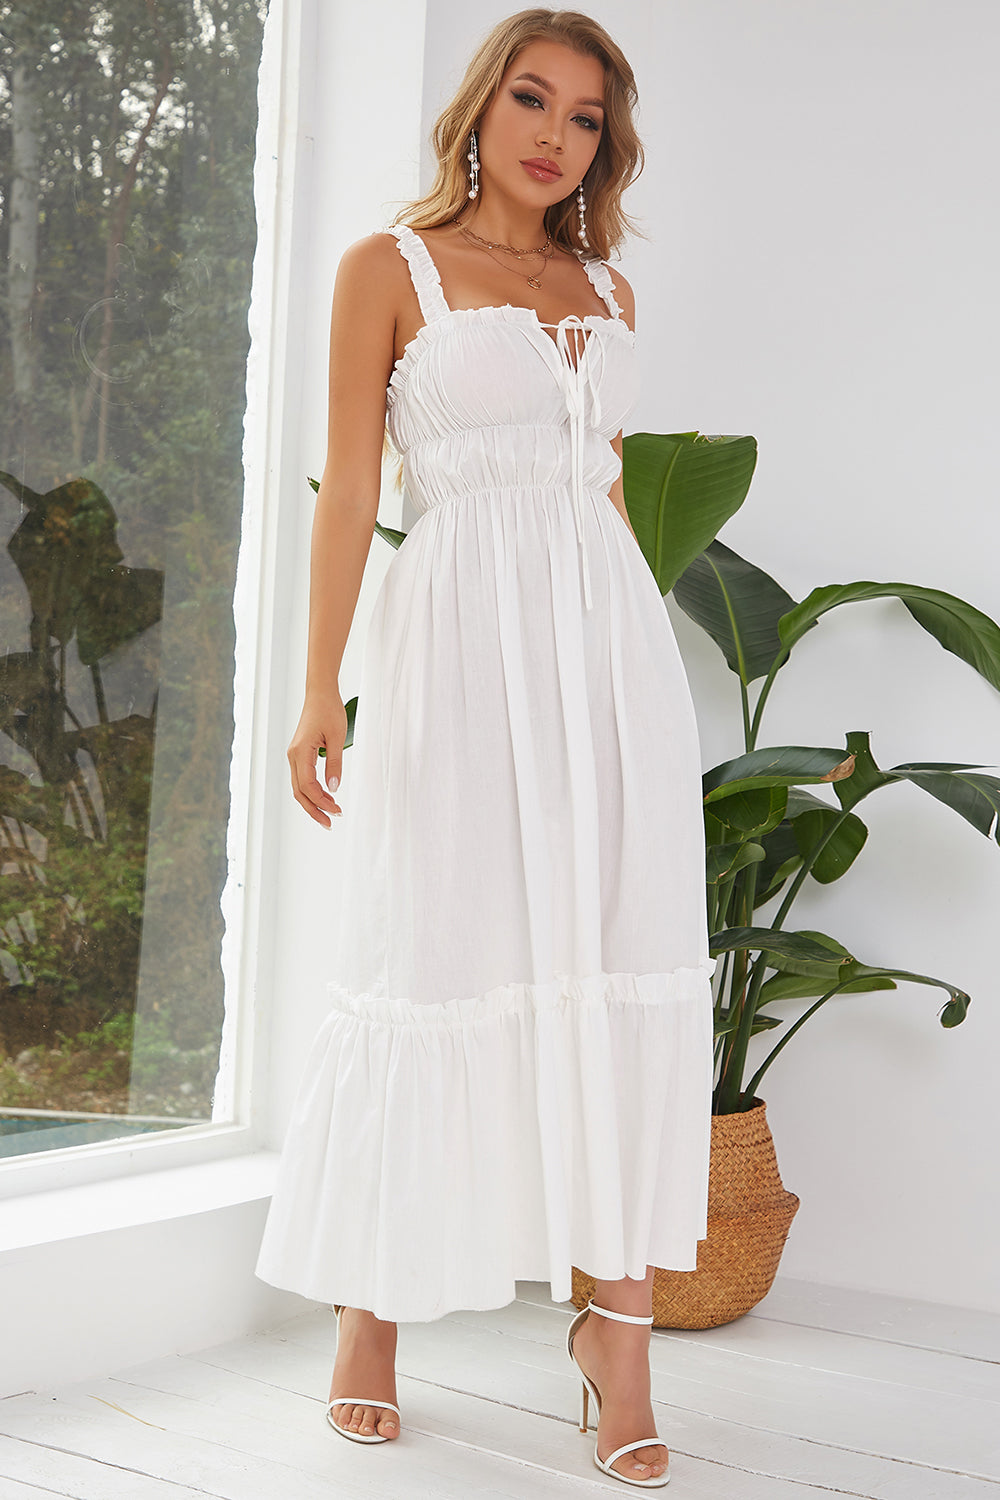 White Summer Boho Wedding Party Dress